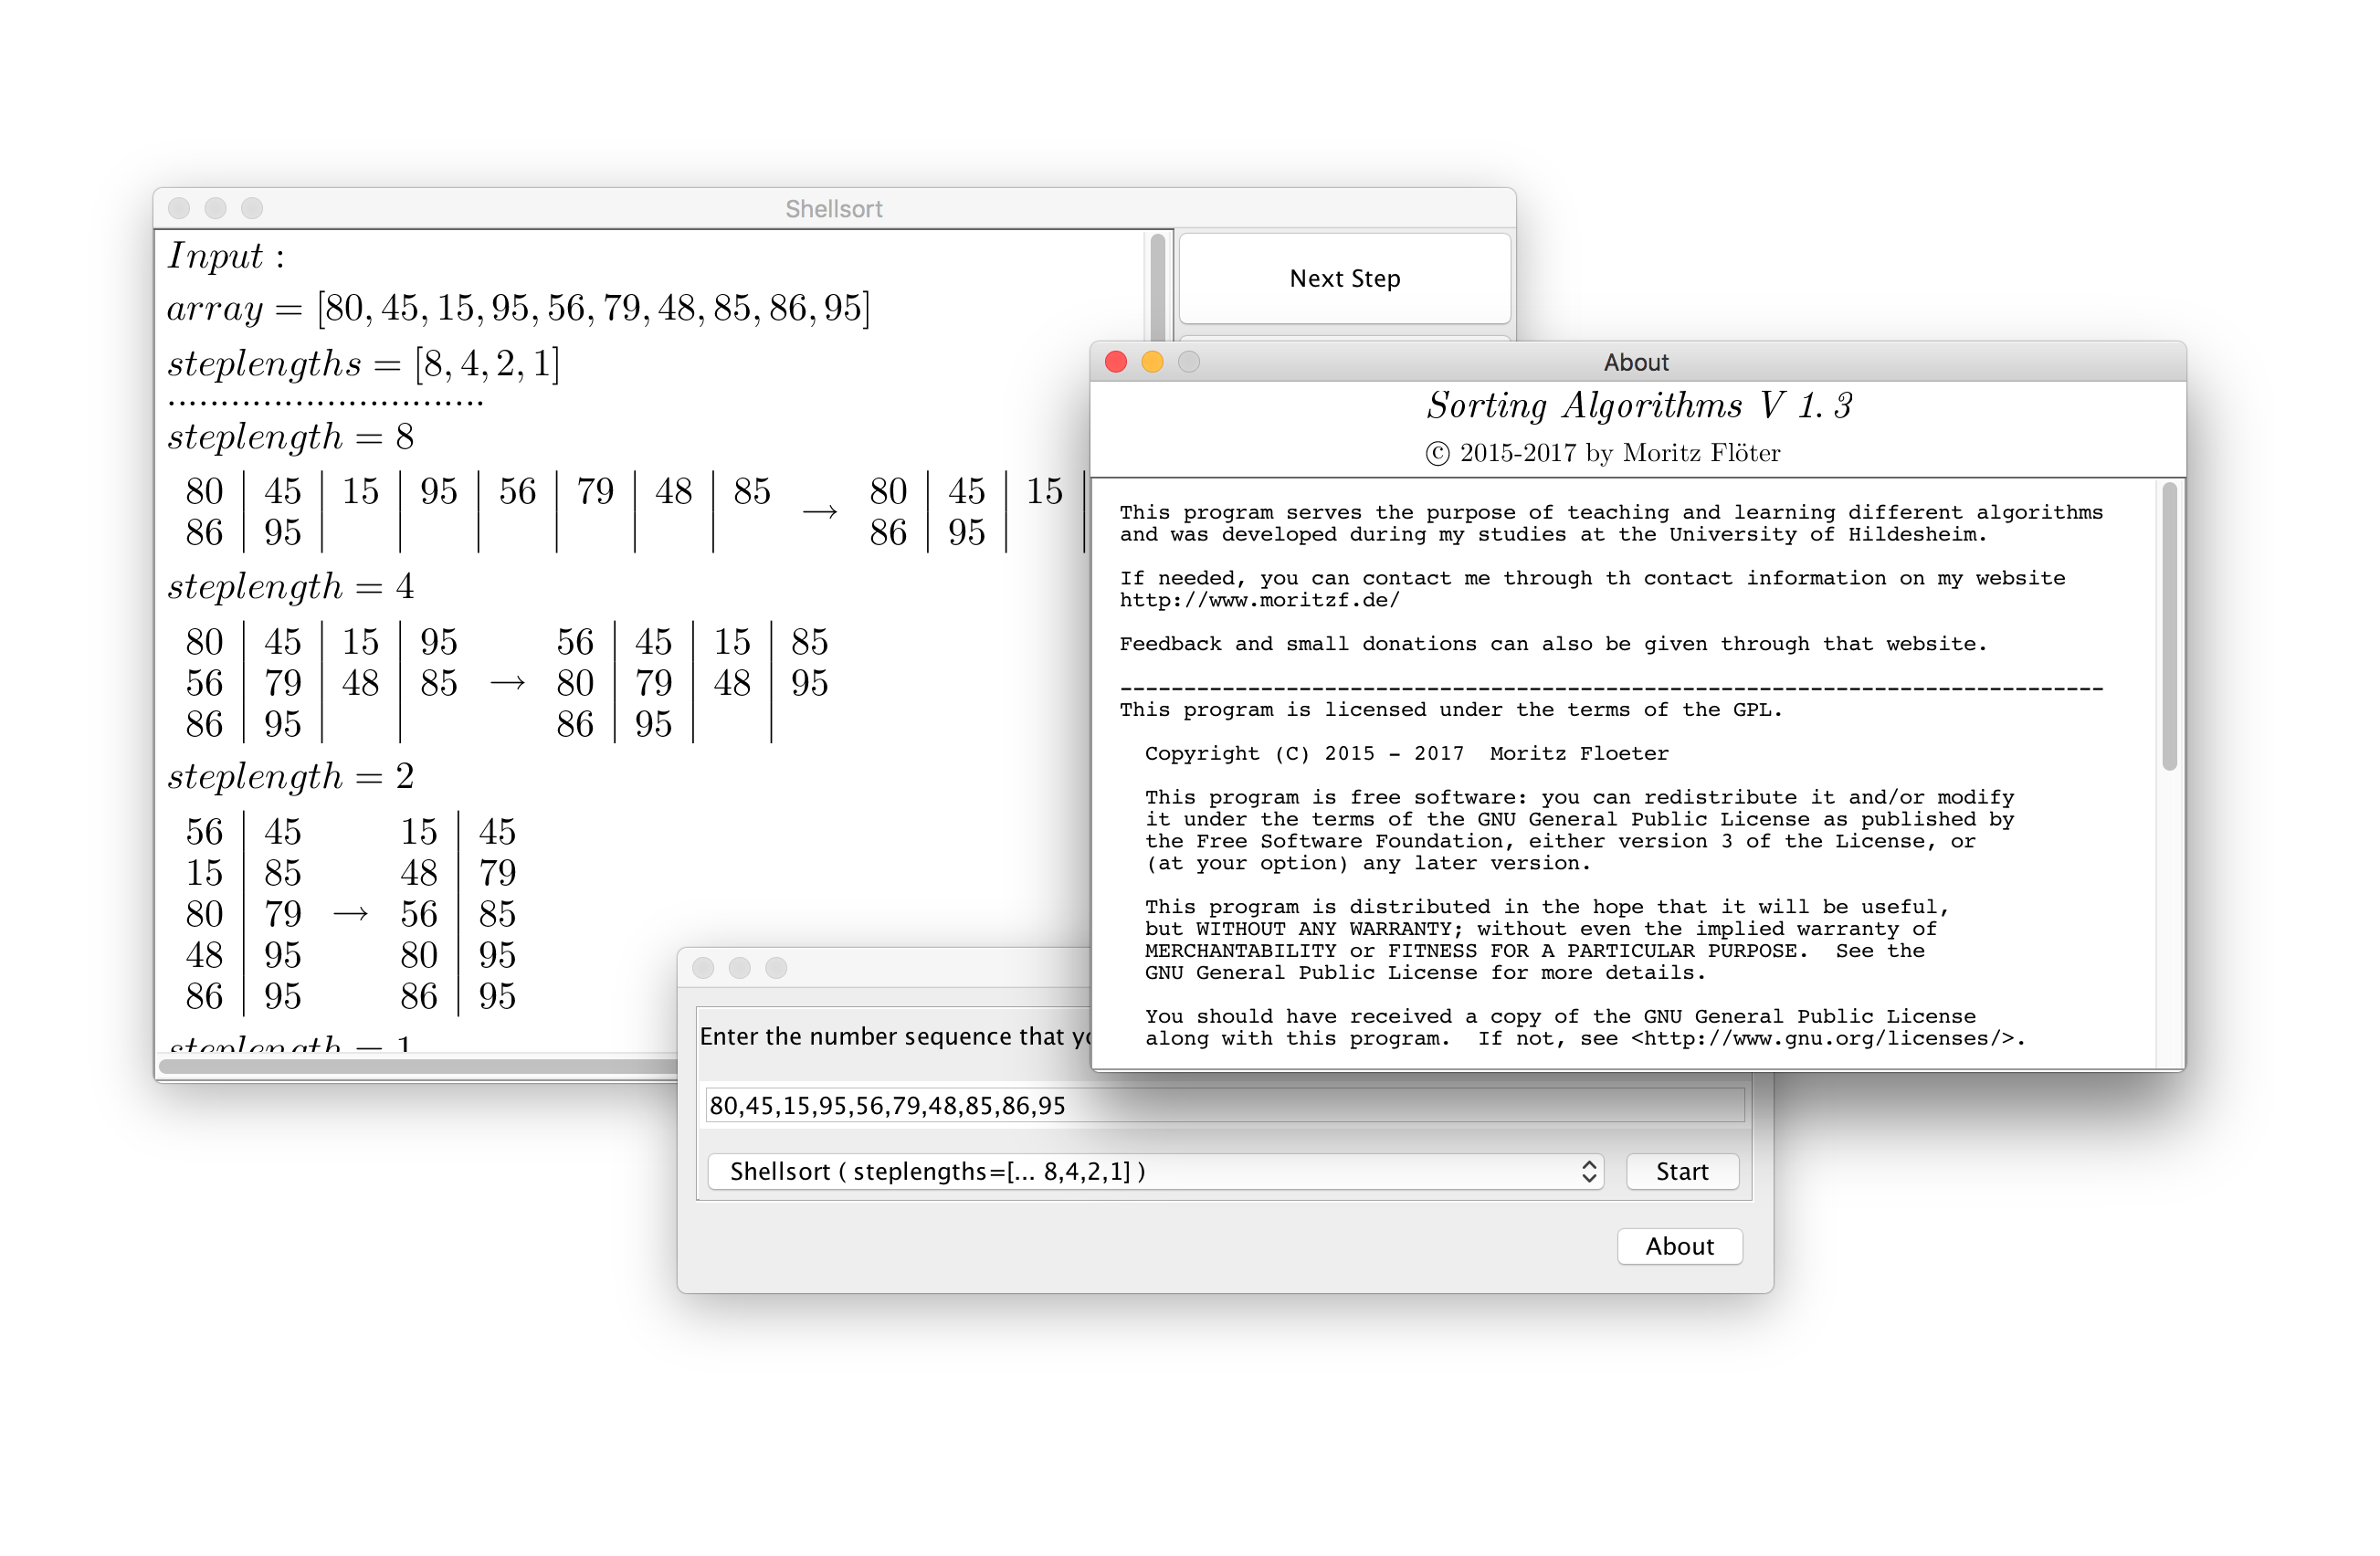 screenshot of the sorting algorithms software program